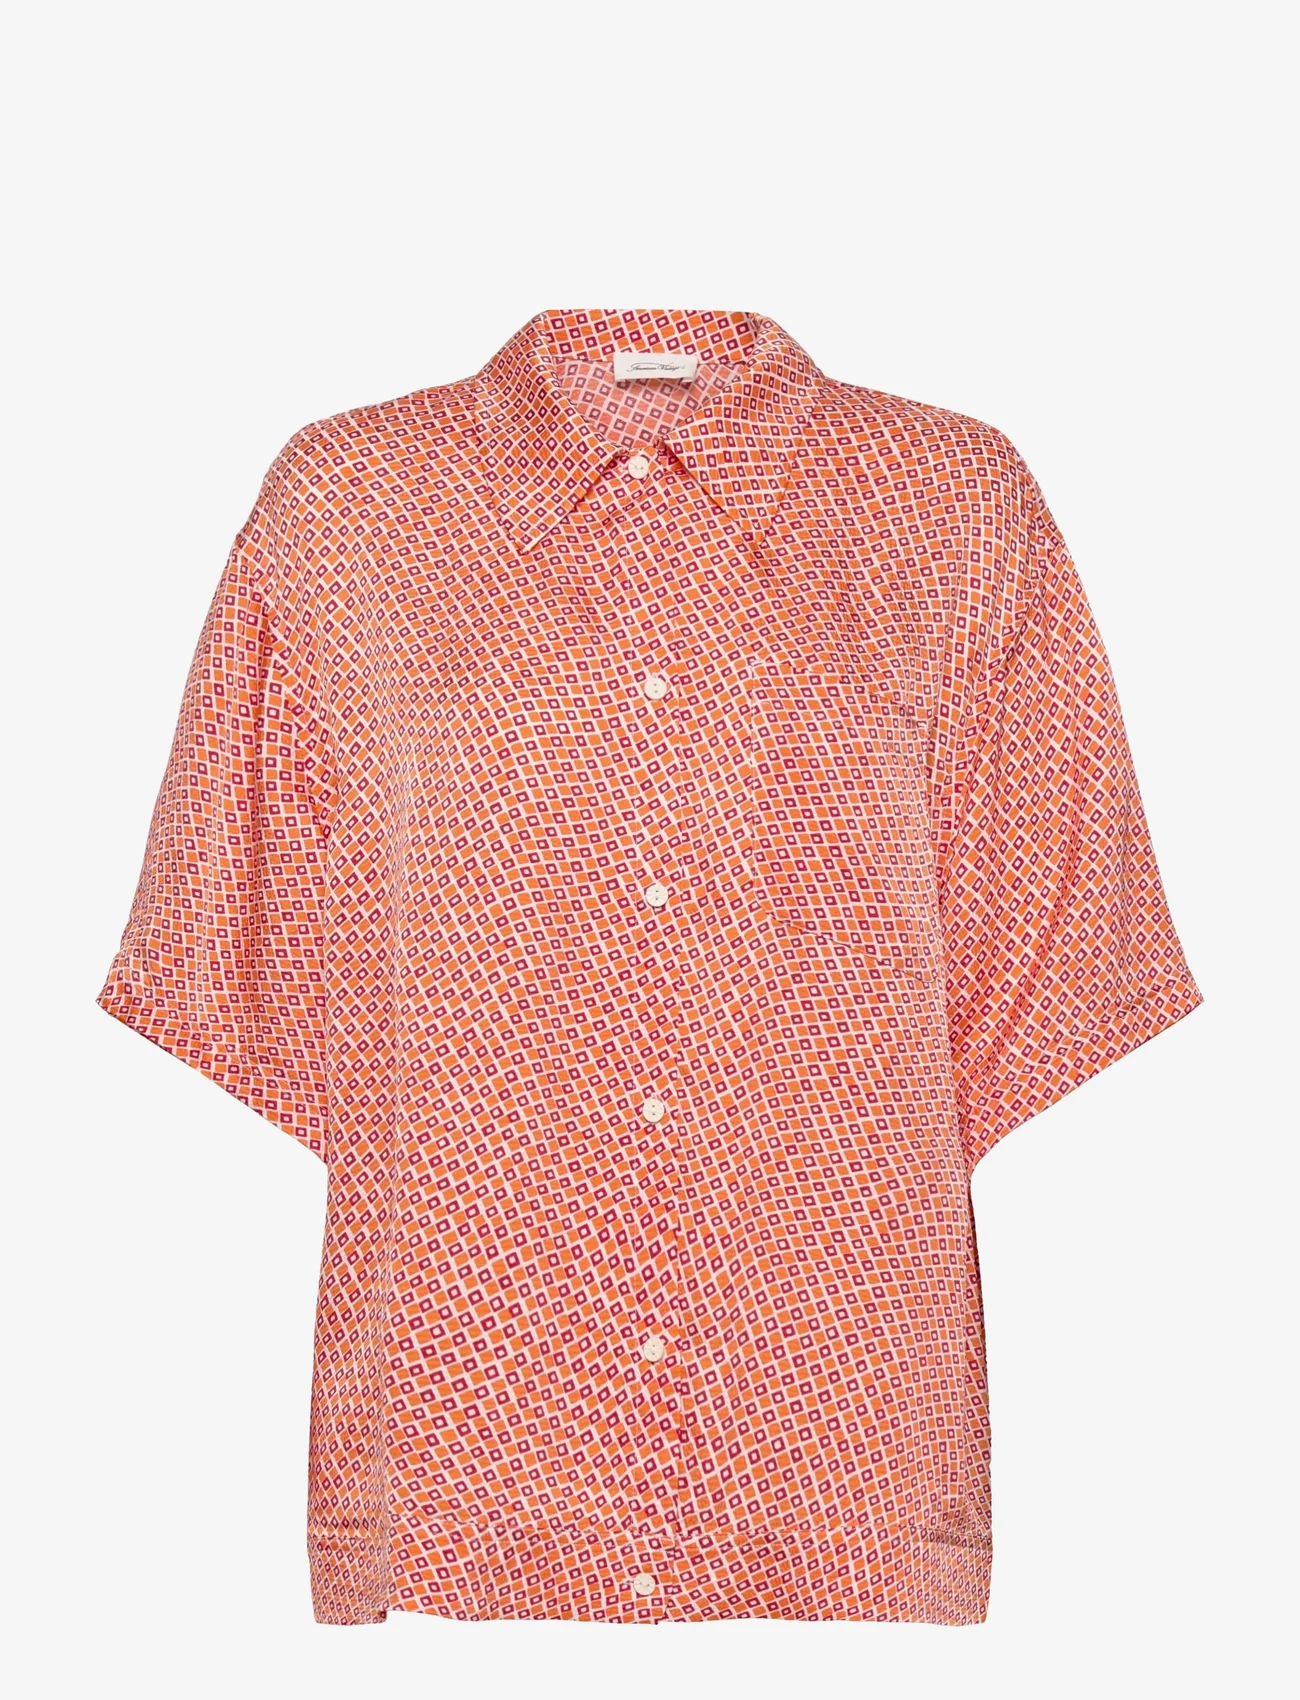 American Vintage - GINTOWN - kurzärmlige hemden - phoebe - 0